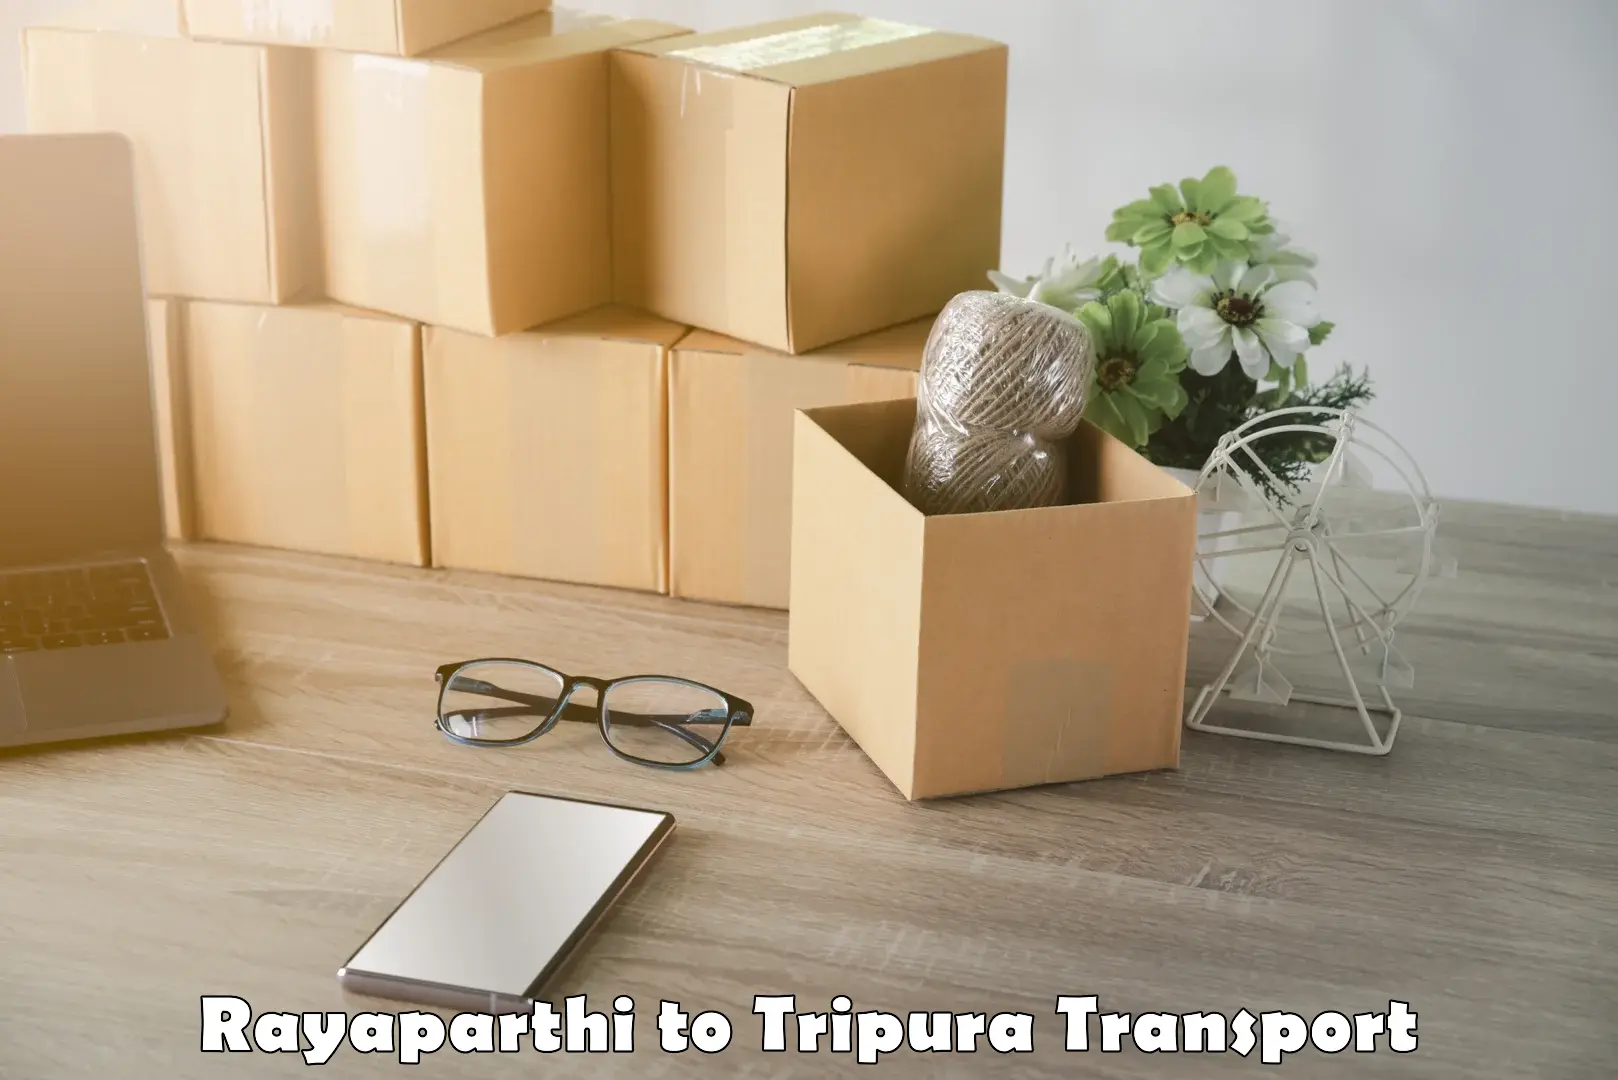 Daily parcel service transport Rayaparthi to South Tripura